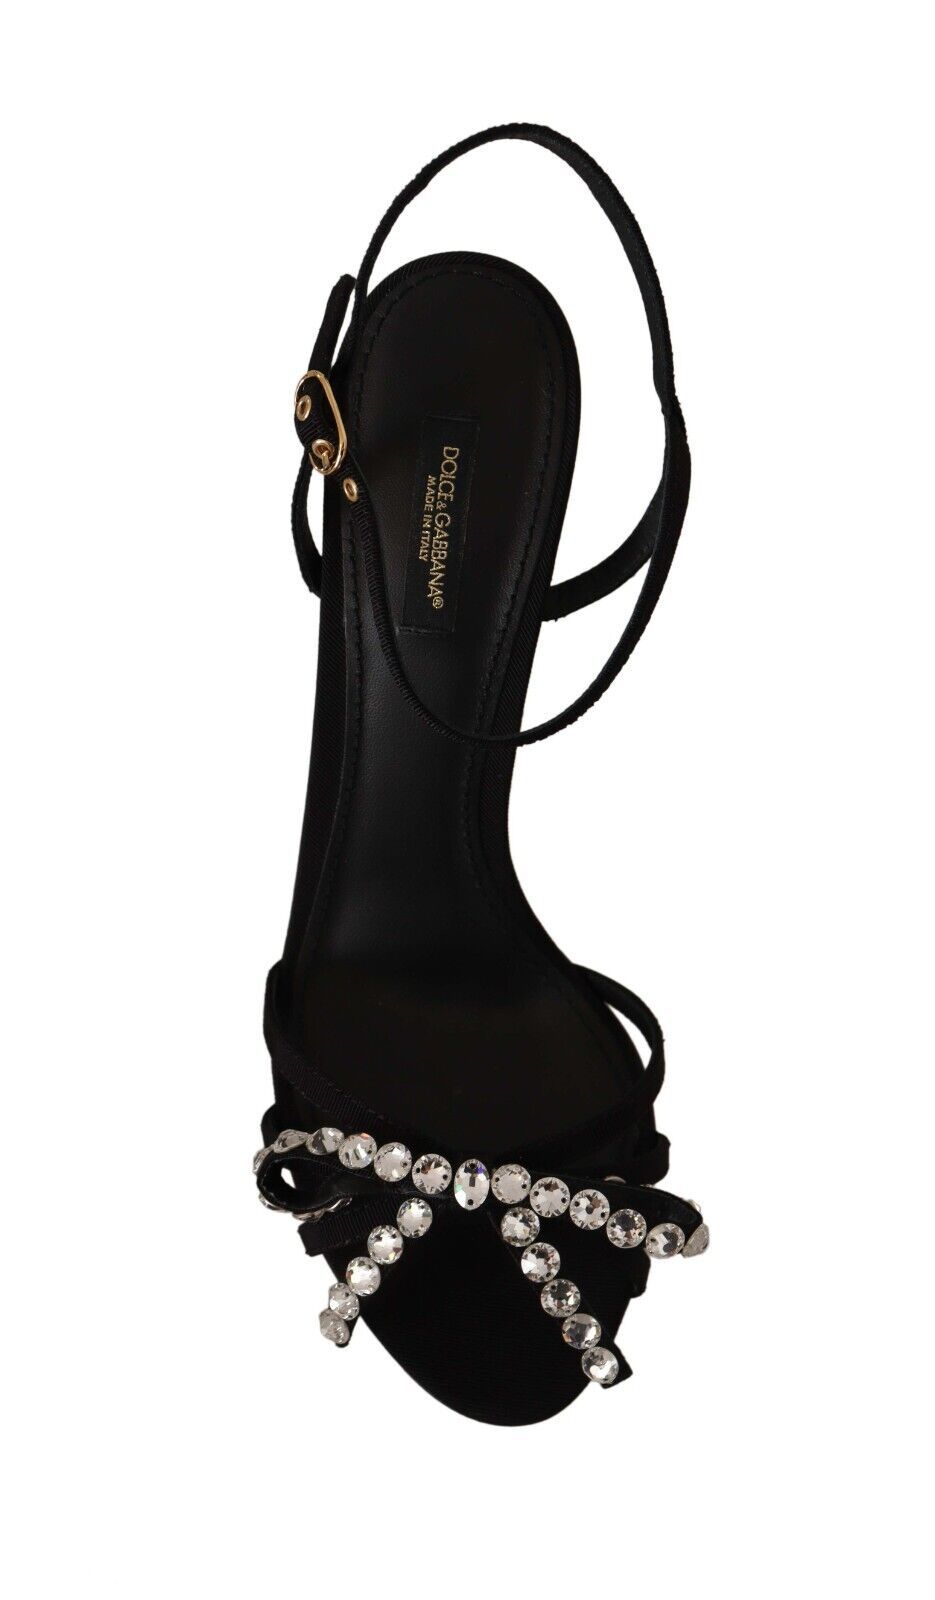 Black Crystals Ankle Strap Heels Sandals Shoes